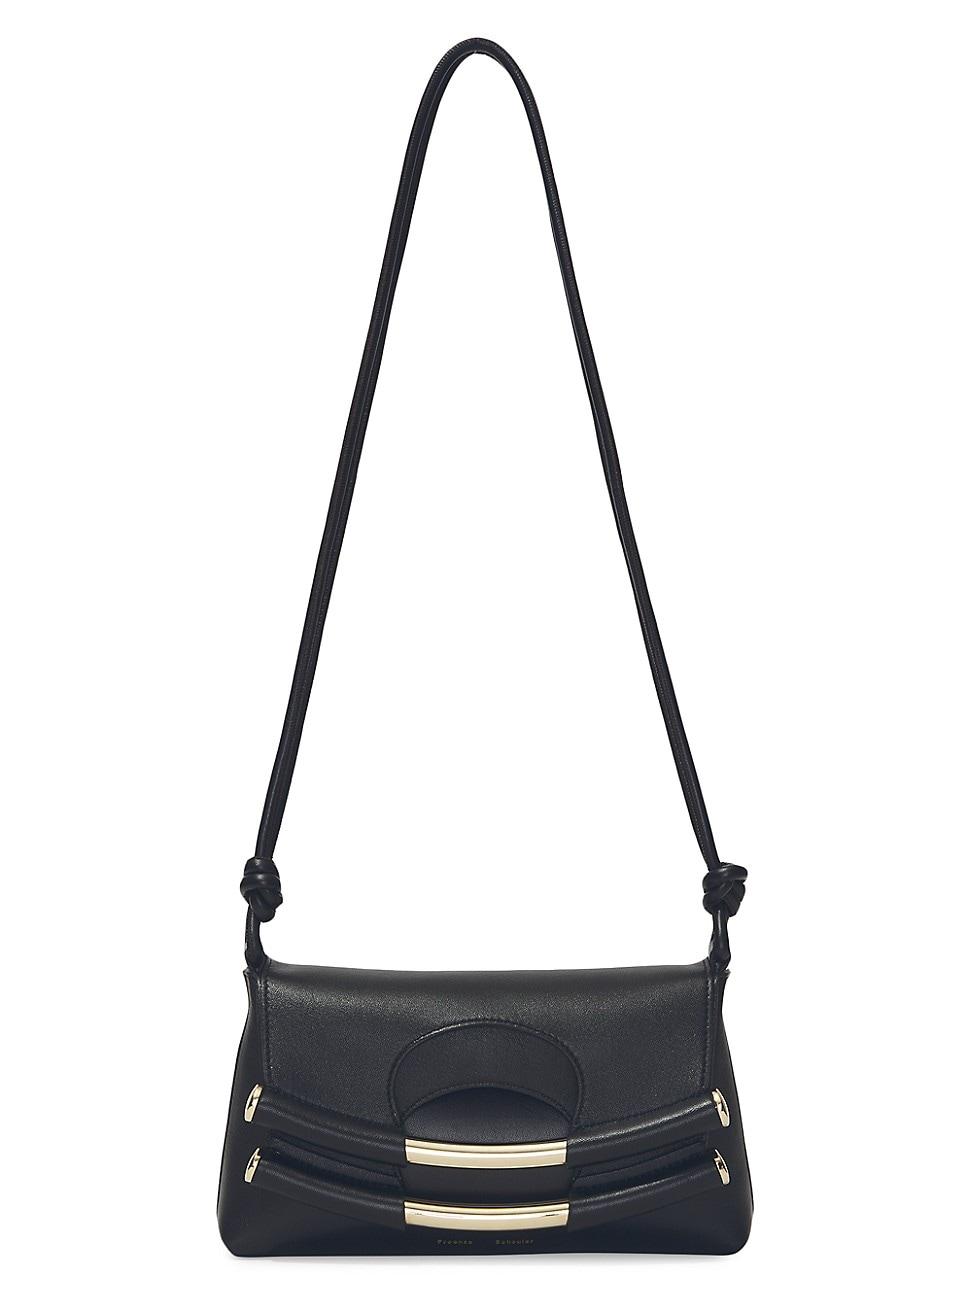 Proenza Schouler Small Bar Foldover Crossbody Bag in Black | Lyst